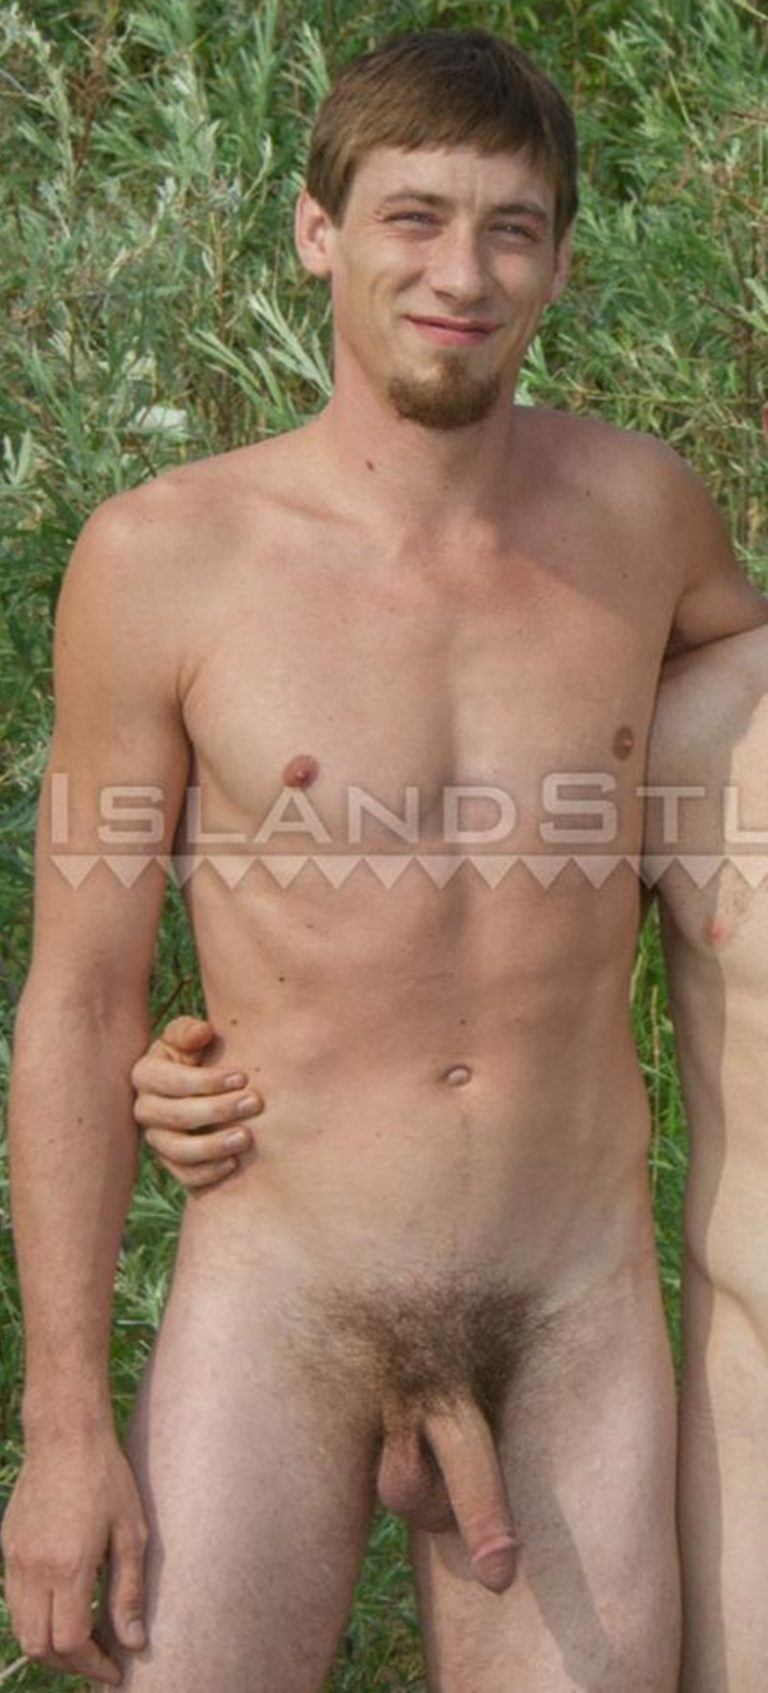 Island Studs American stud Eros mygaypornstarlist 001 gay porn pics 768x1693 - Island Studs Eros